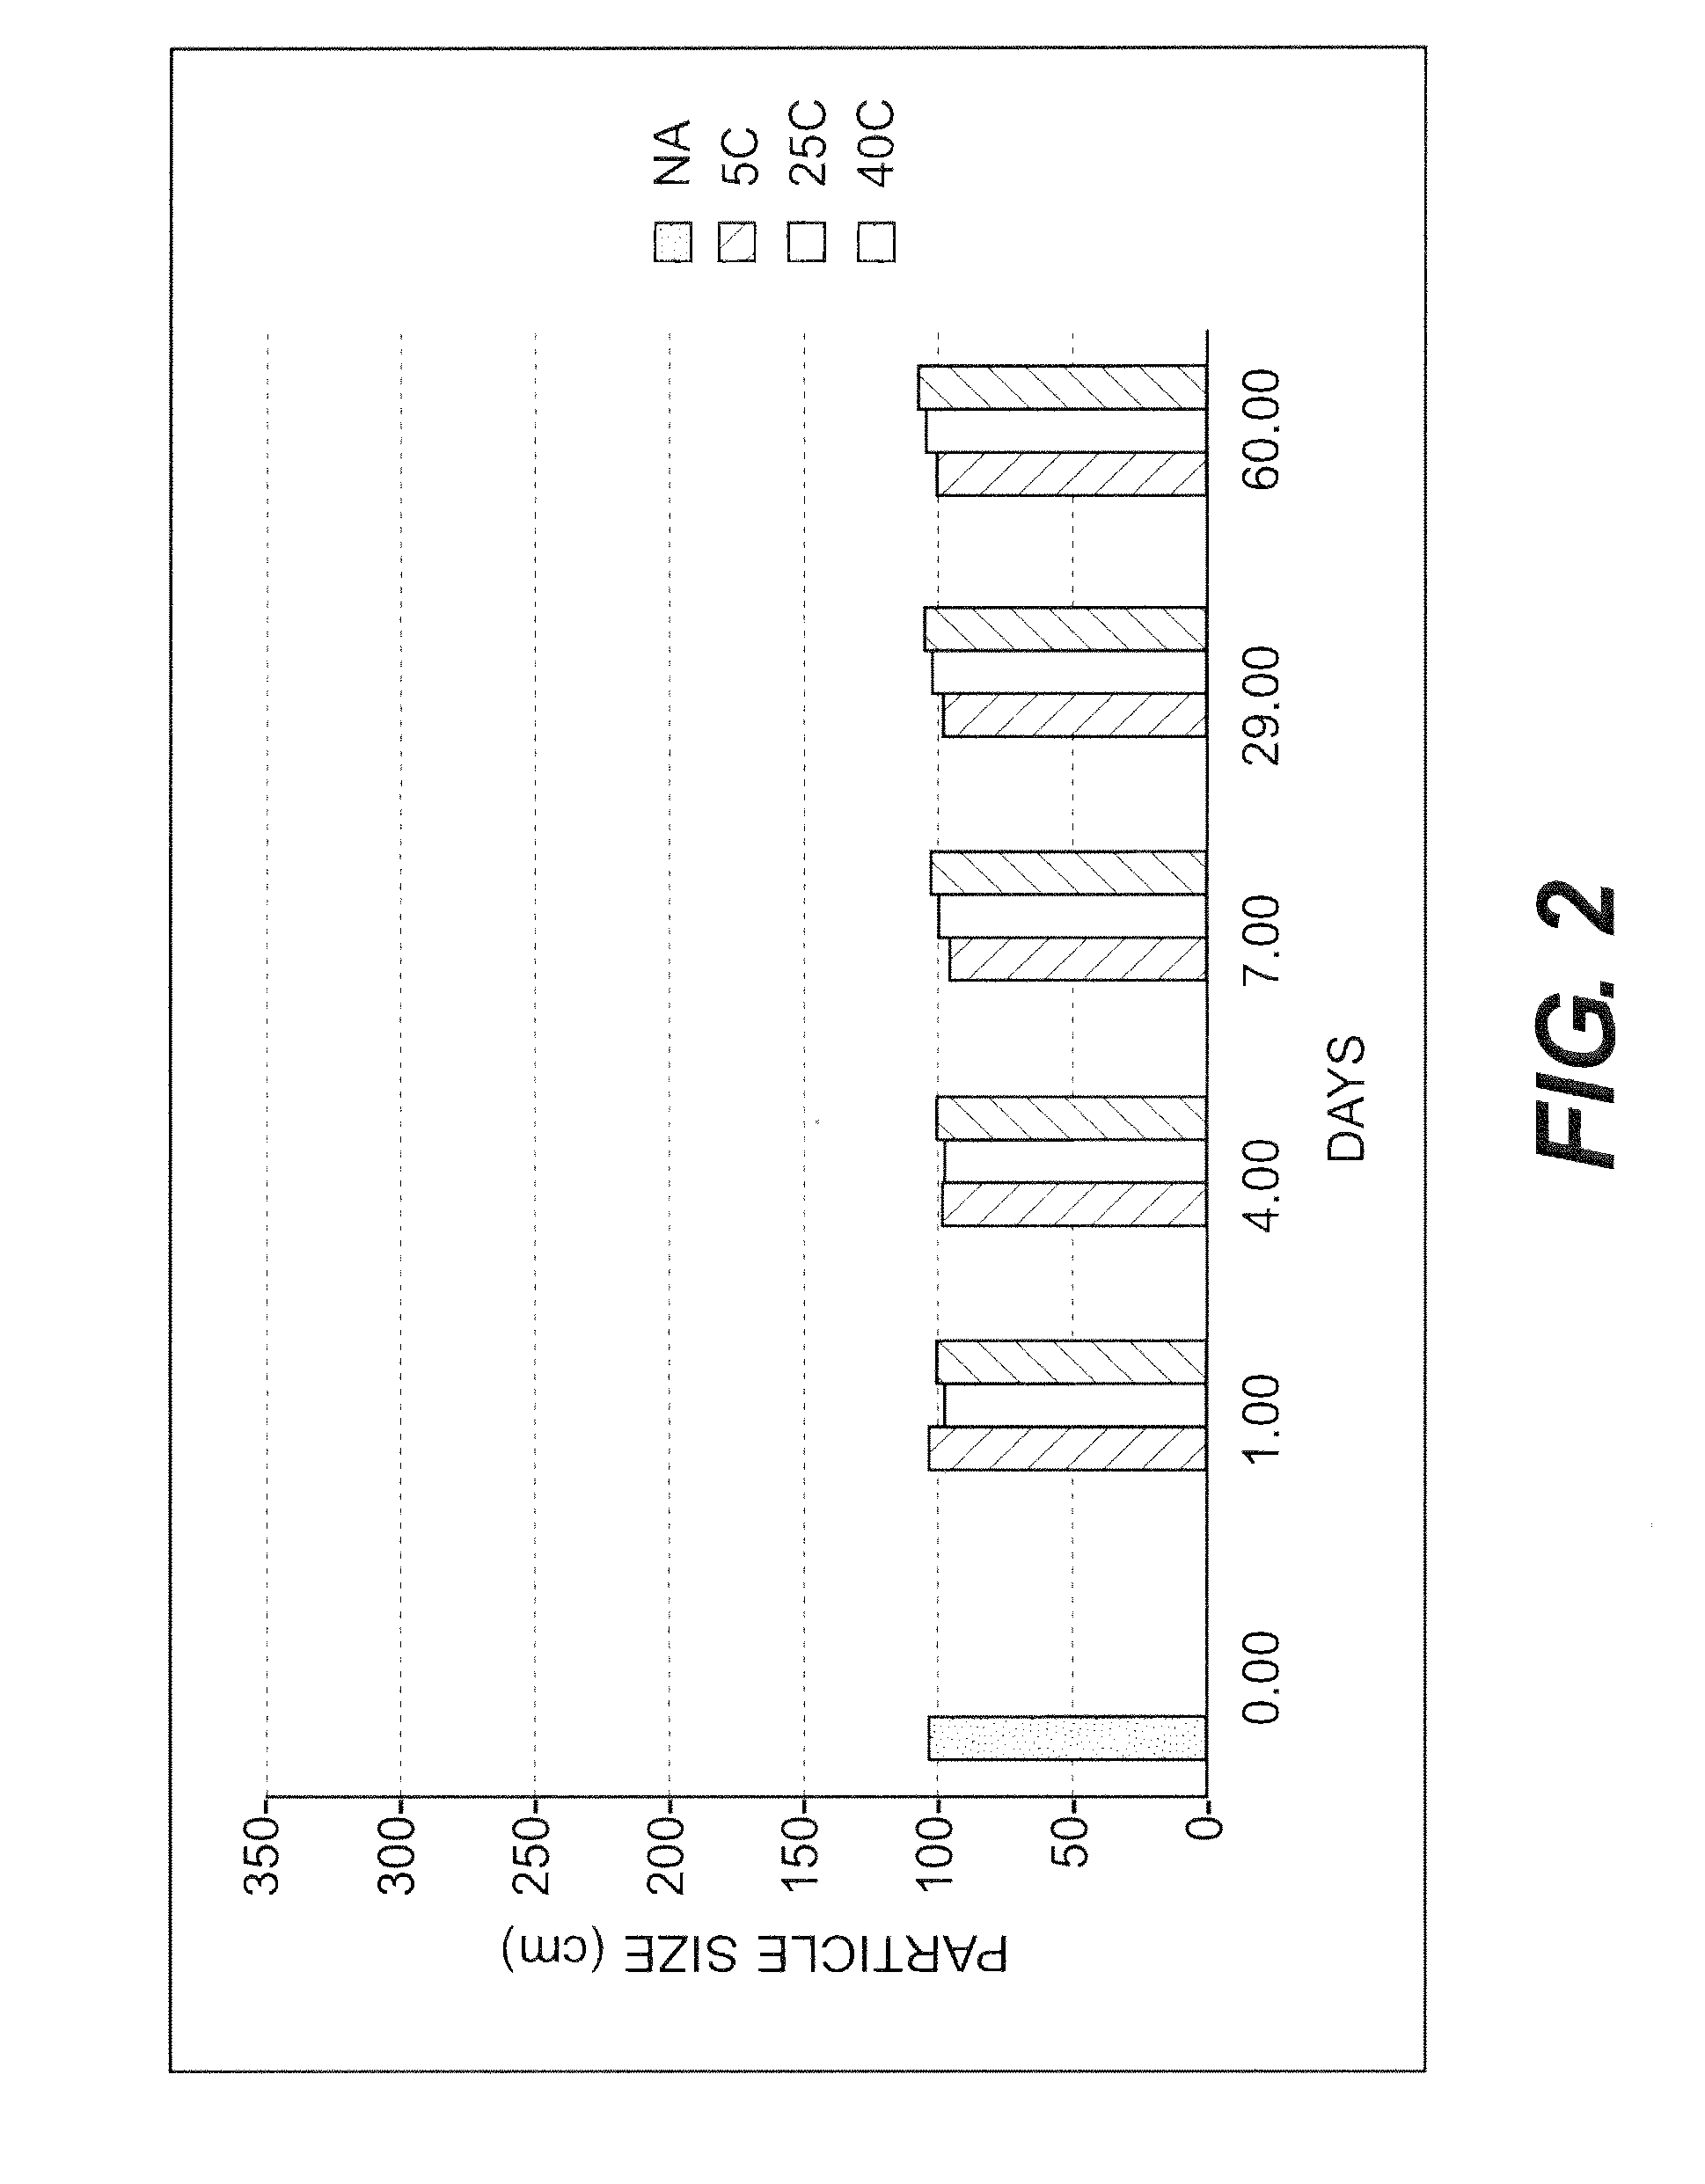 Nanoparticulate meloxicam formulations